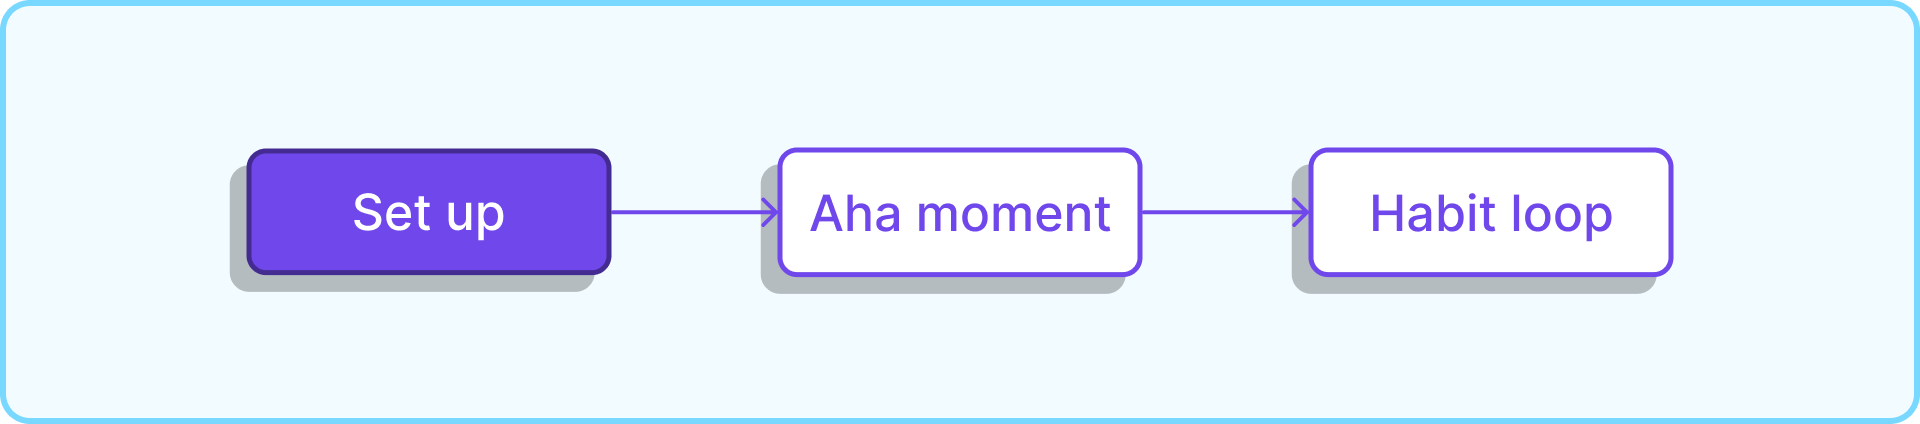 Set up moment diagram